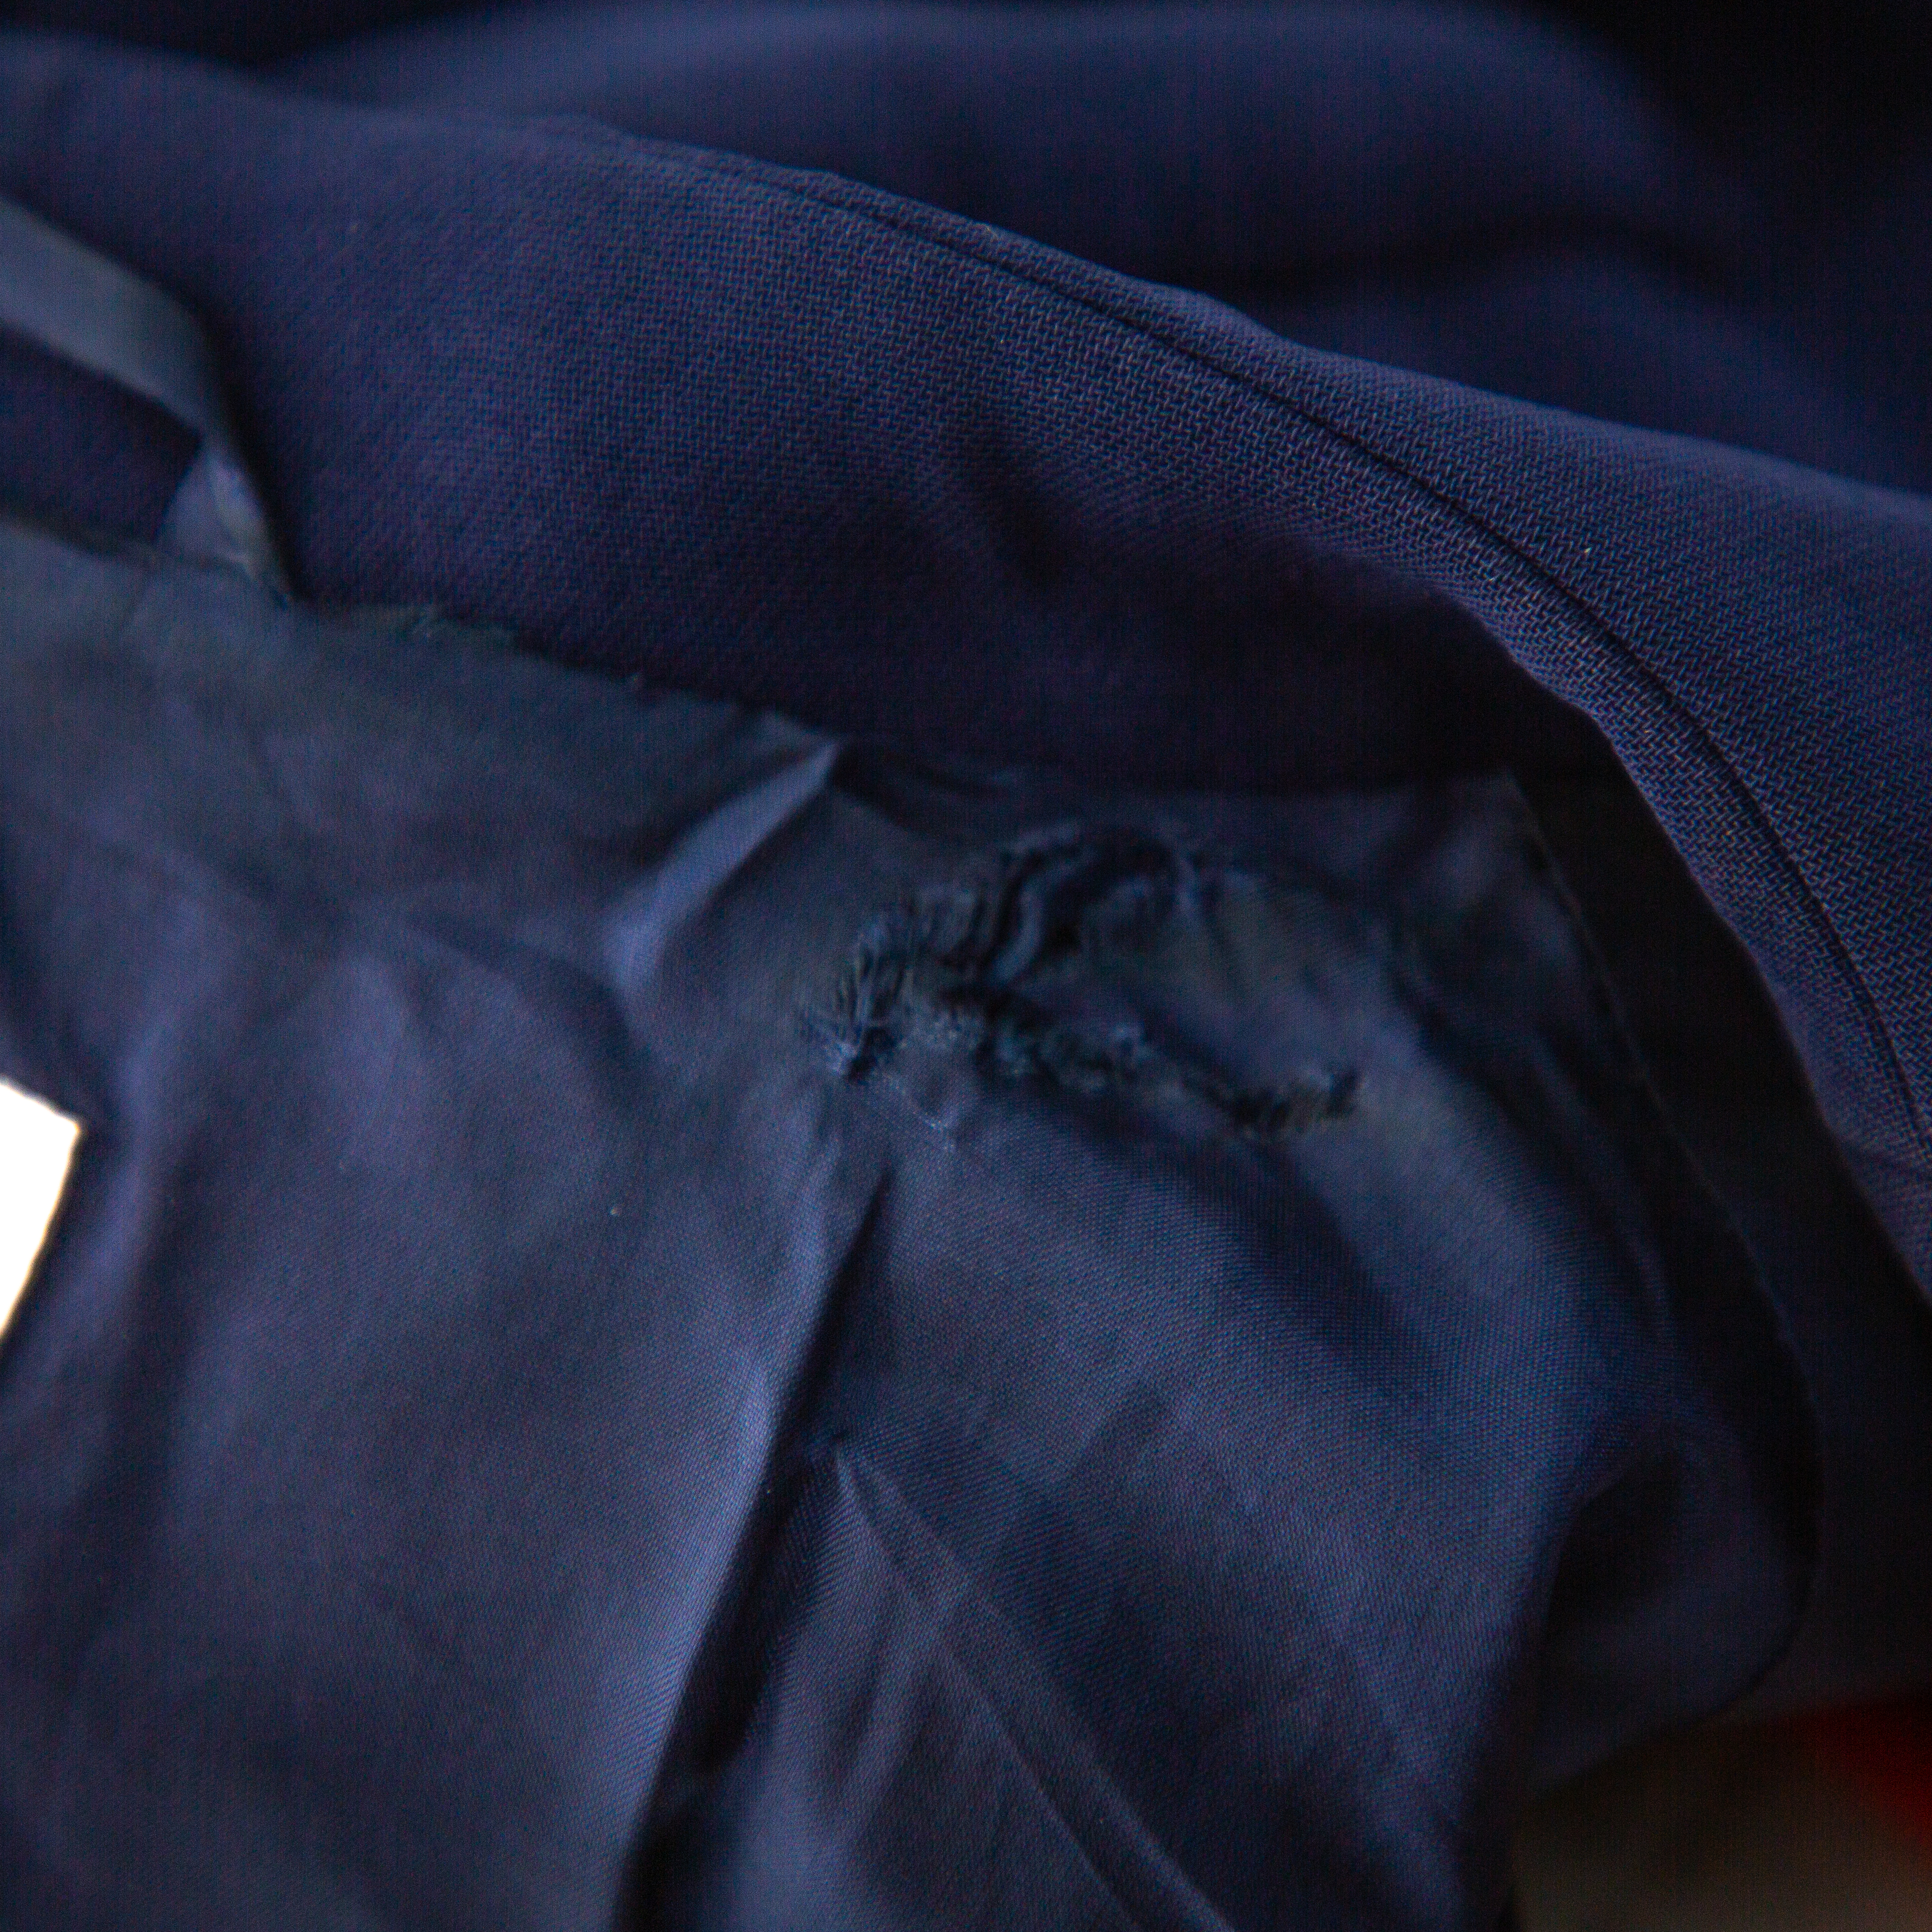 Emporio Armani Navy Blue Crepe Paneled Button Front Blazer M